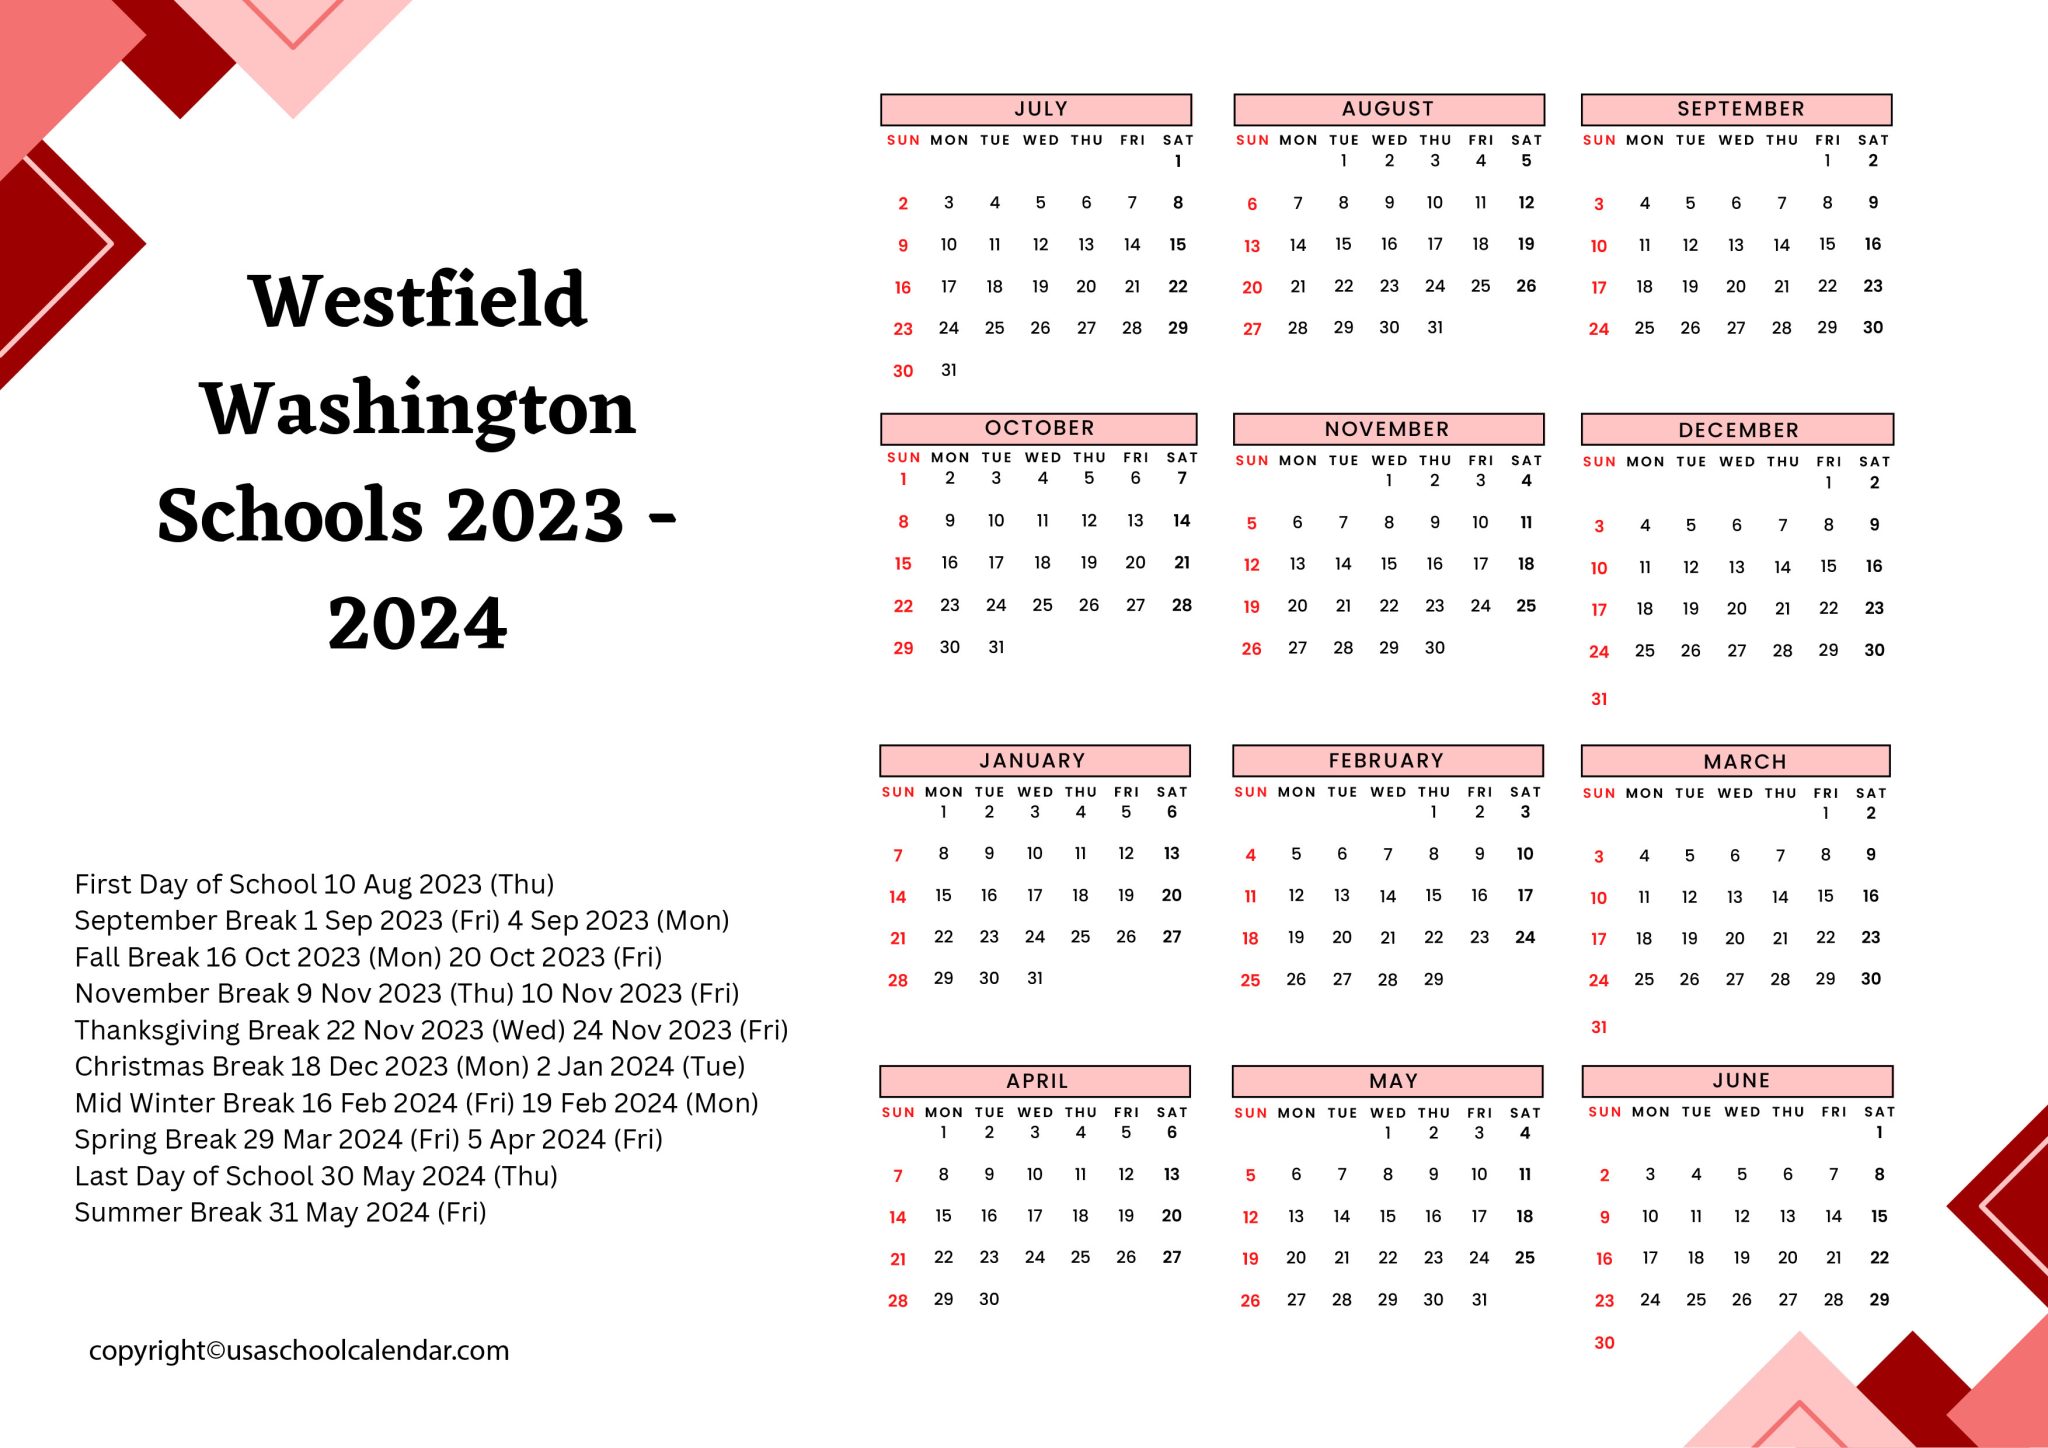 westfield-washington-schools-calendar-holidays-2023-2024